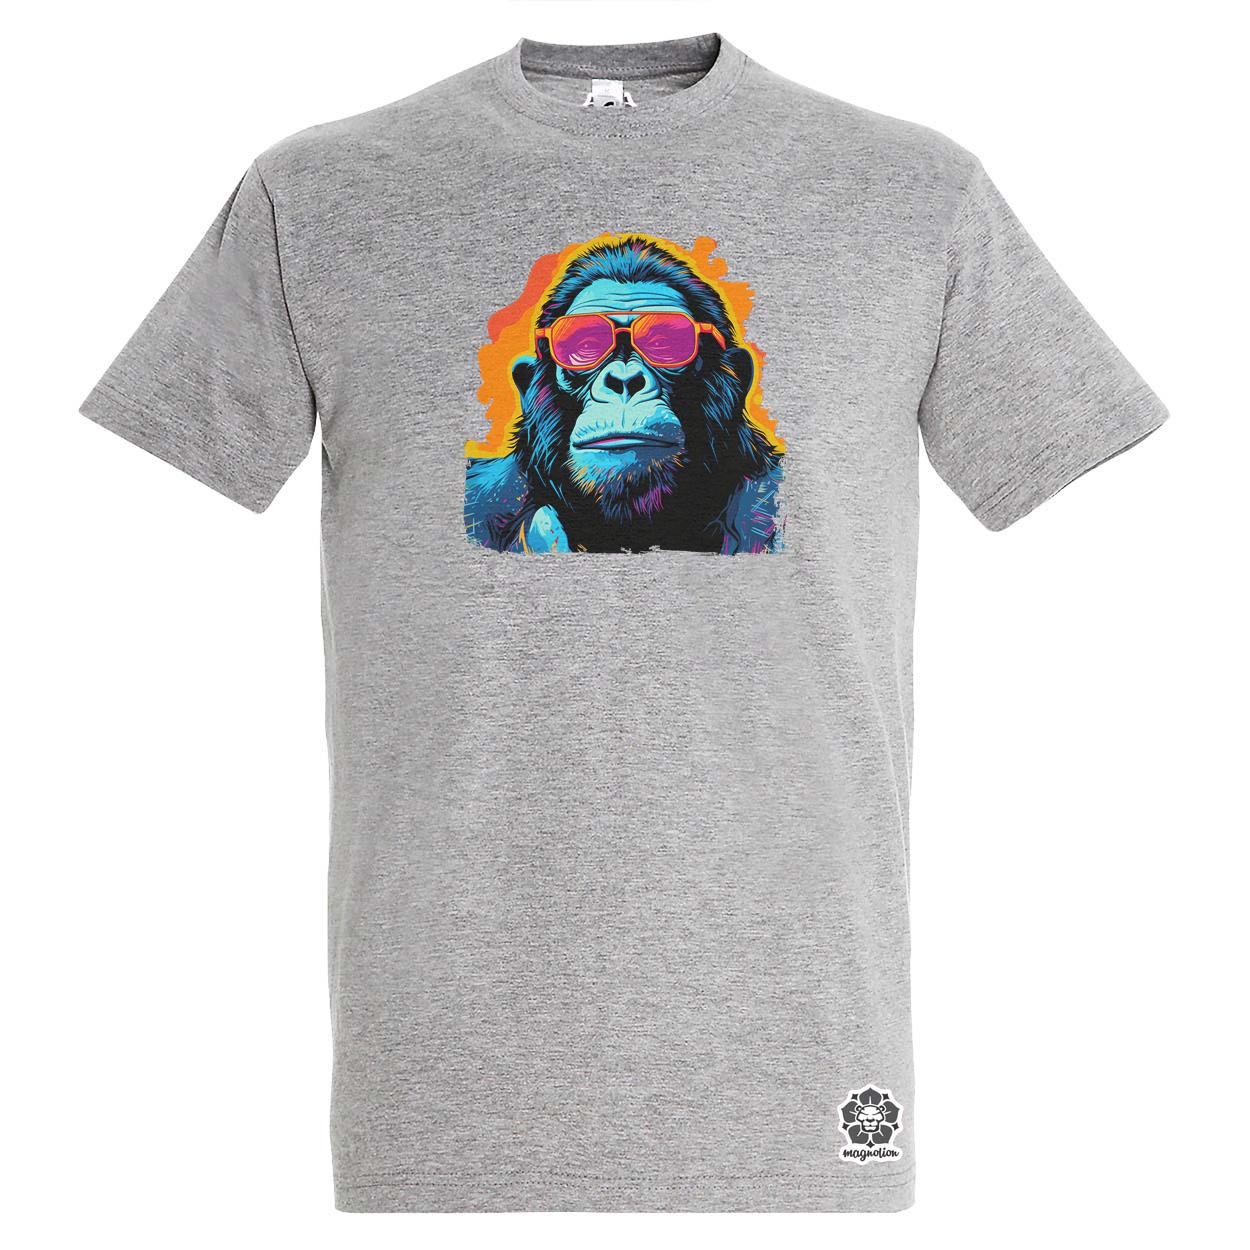 Laza gorilla v2